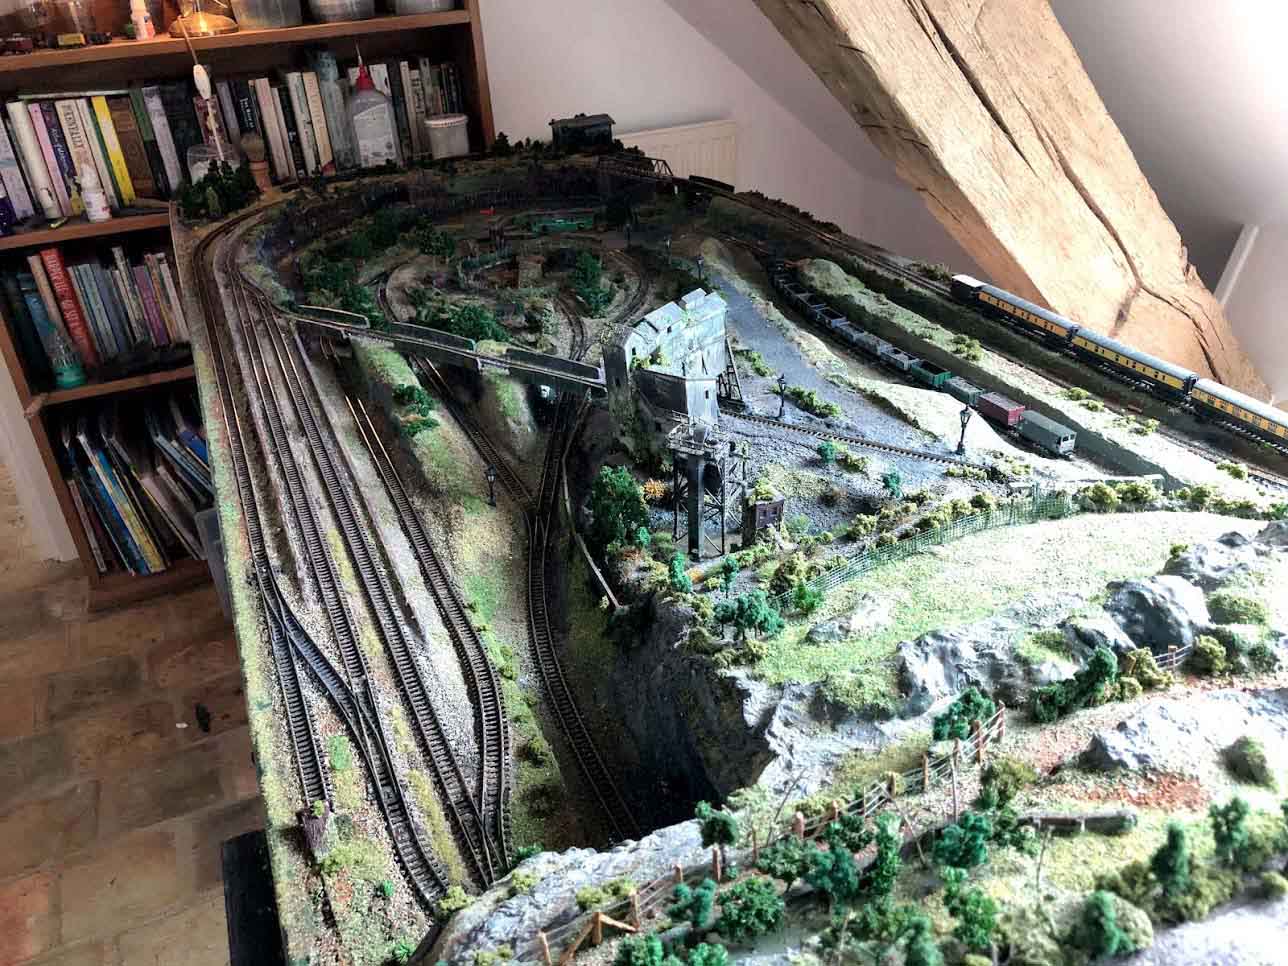 model railway overhead view